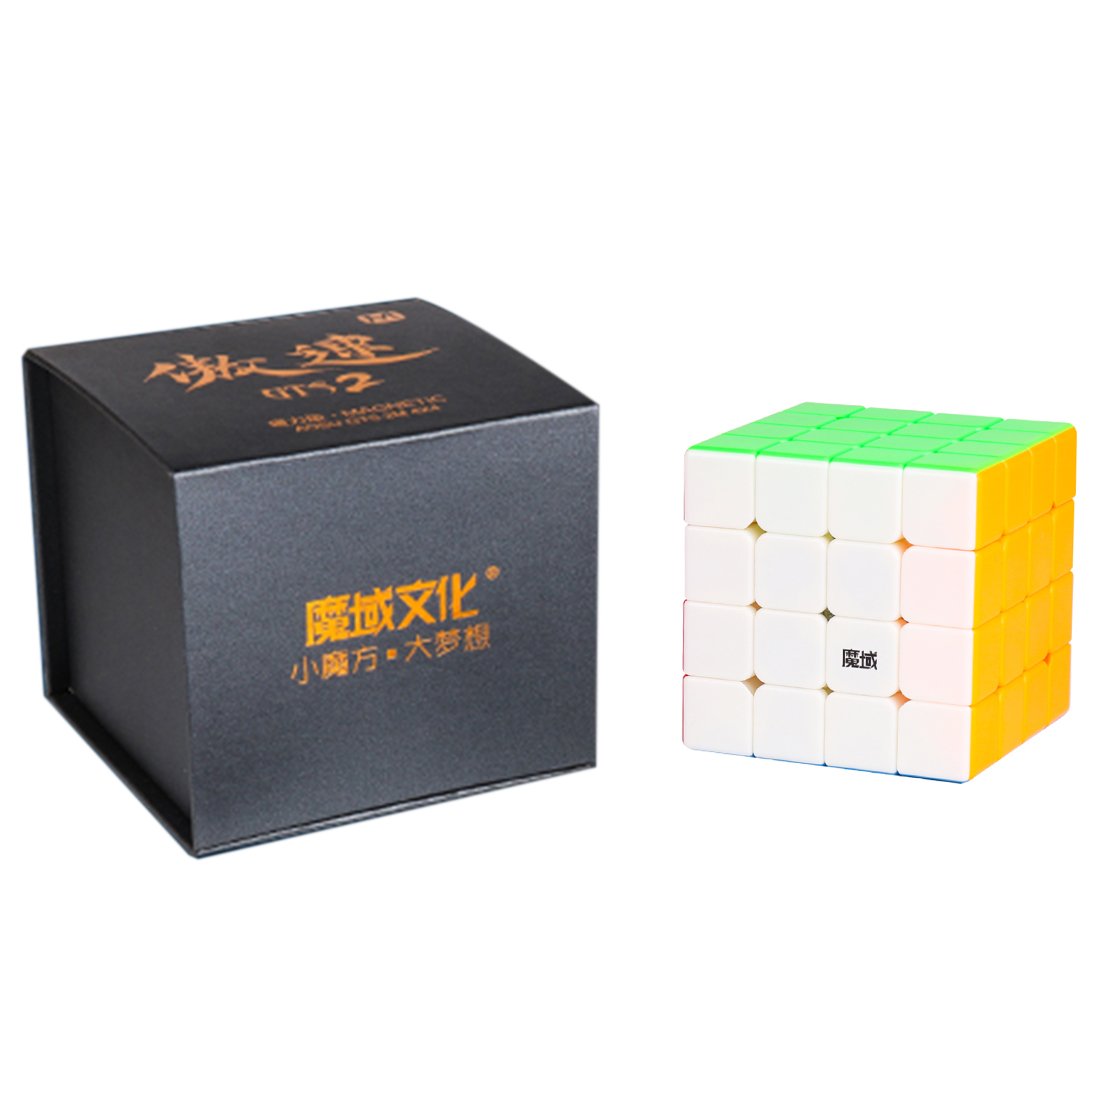 Yj8267 Moyu Aosu Gts2 M 4X4 Magic Cube - Magnetic Version Stickerless